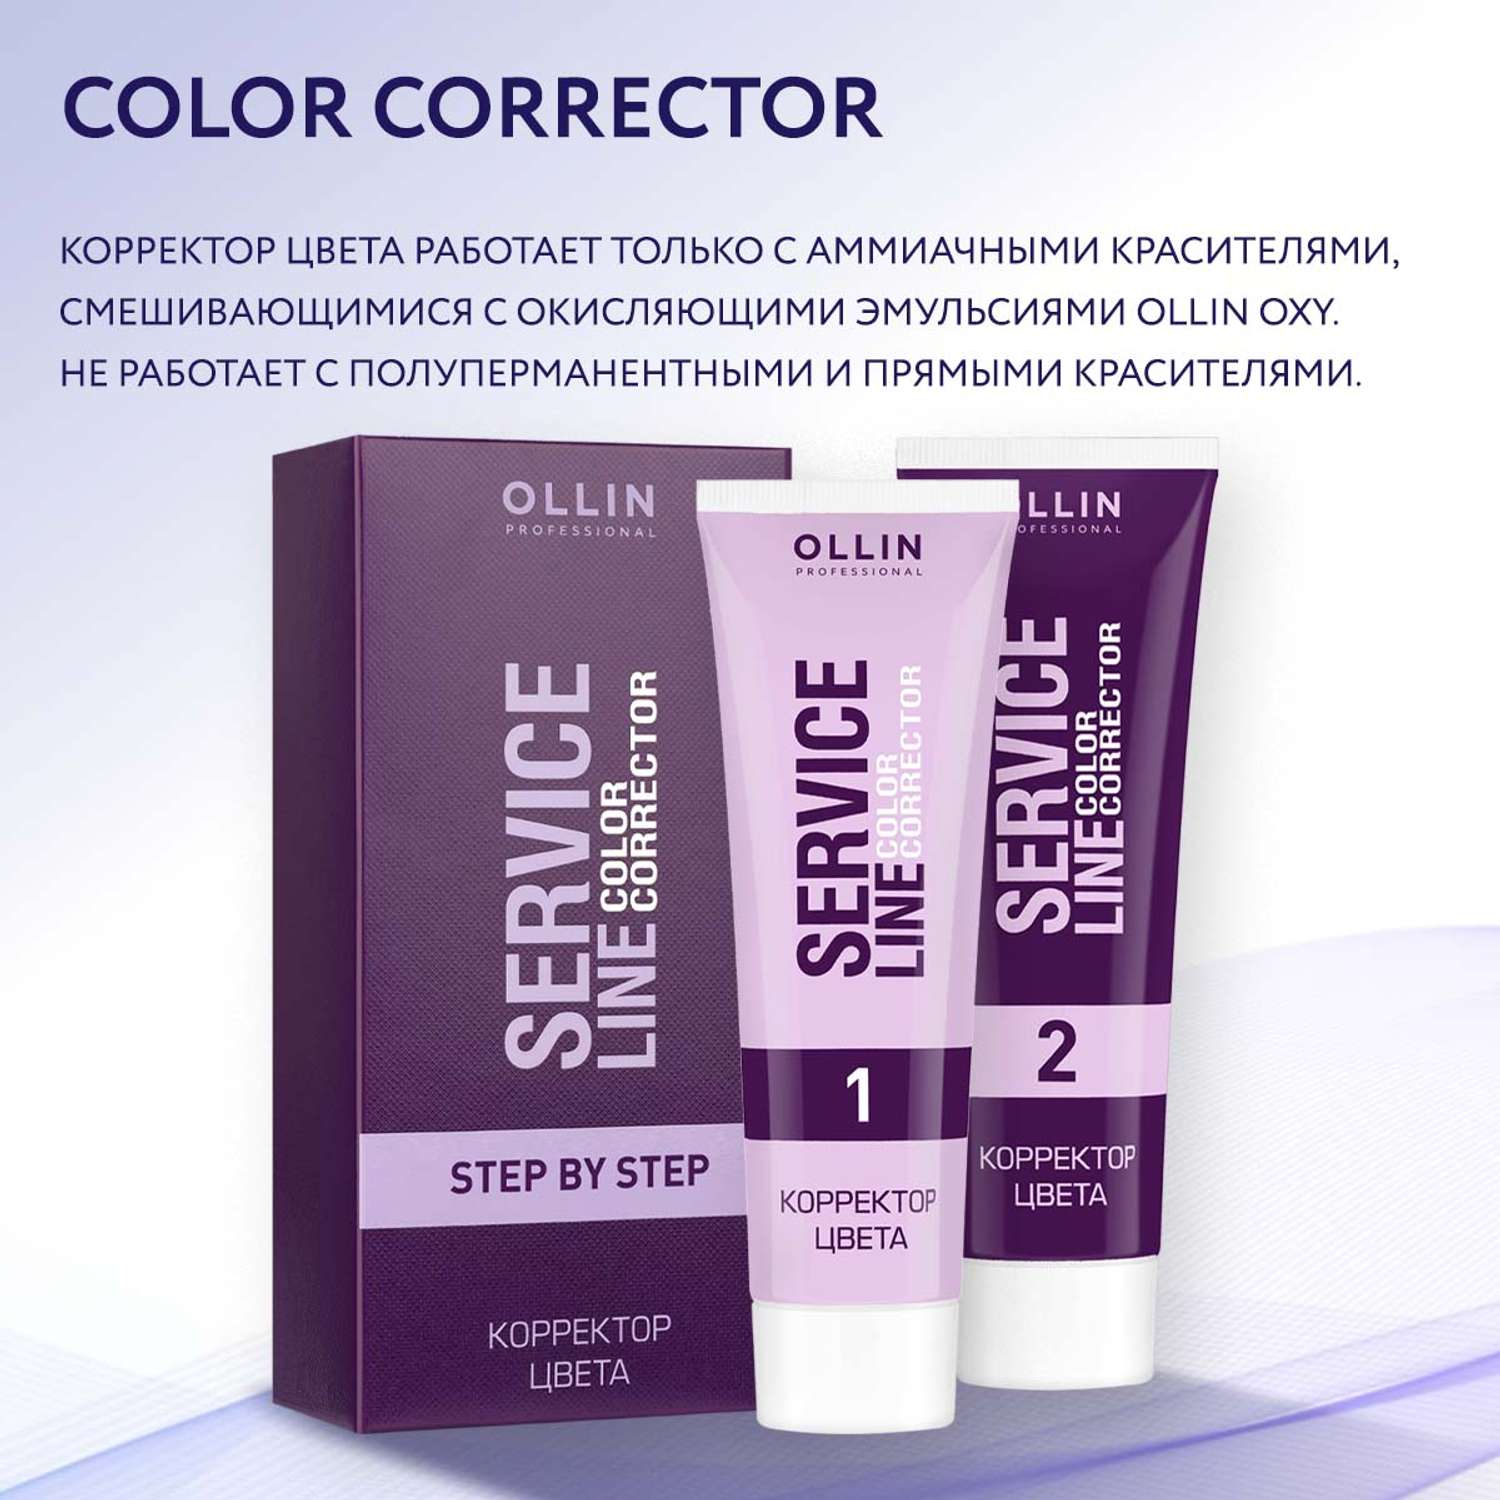 Корректор цвета Ollin SERVICE LINE для волос step by step 2*100 мл - фото 4